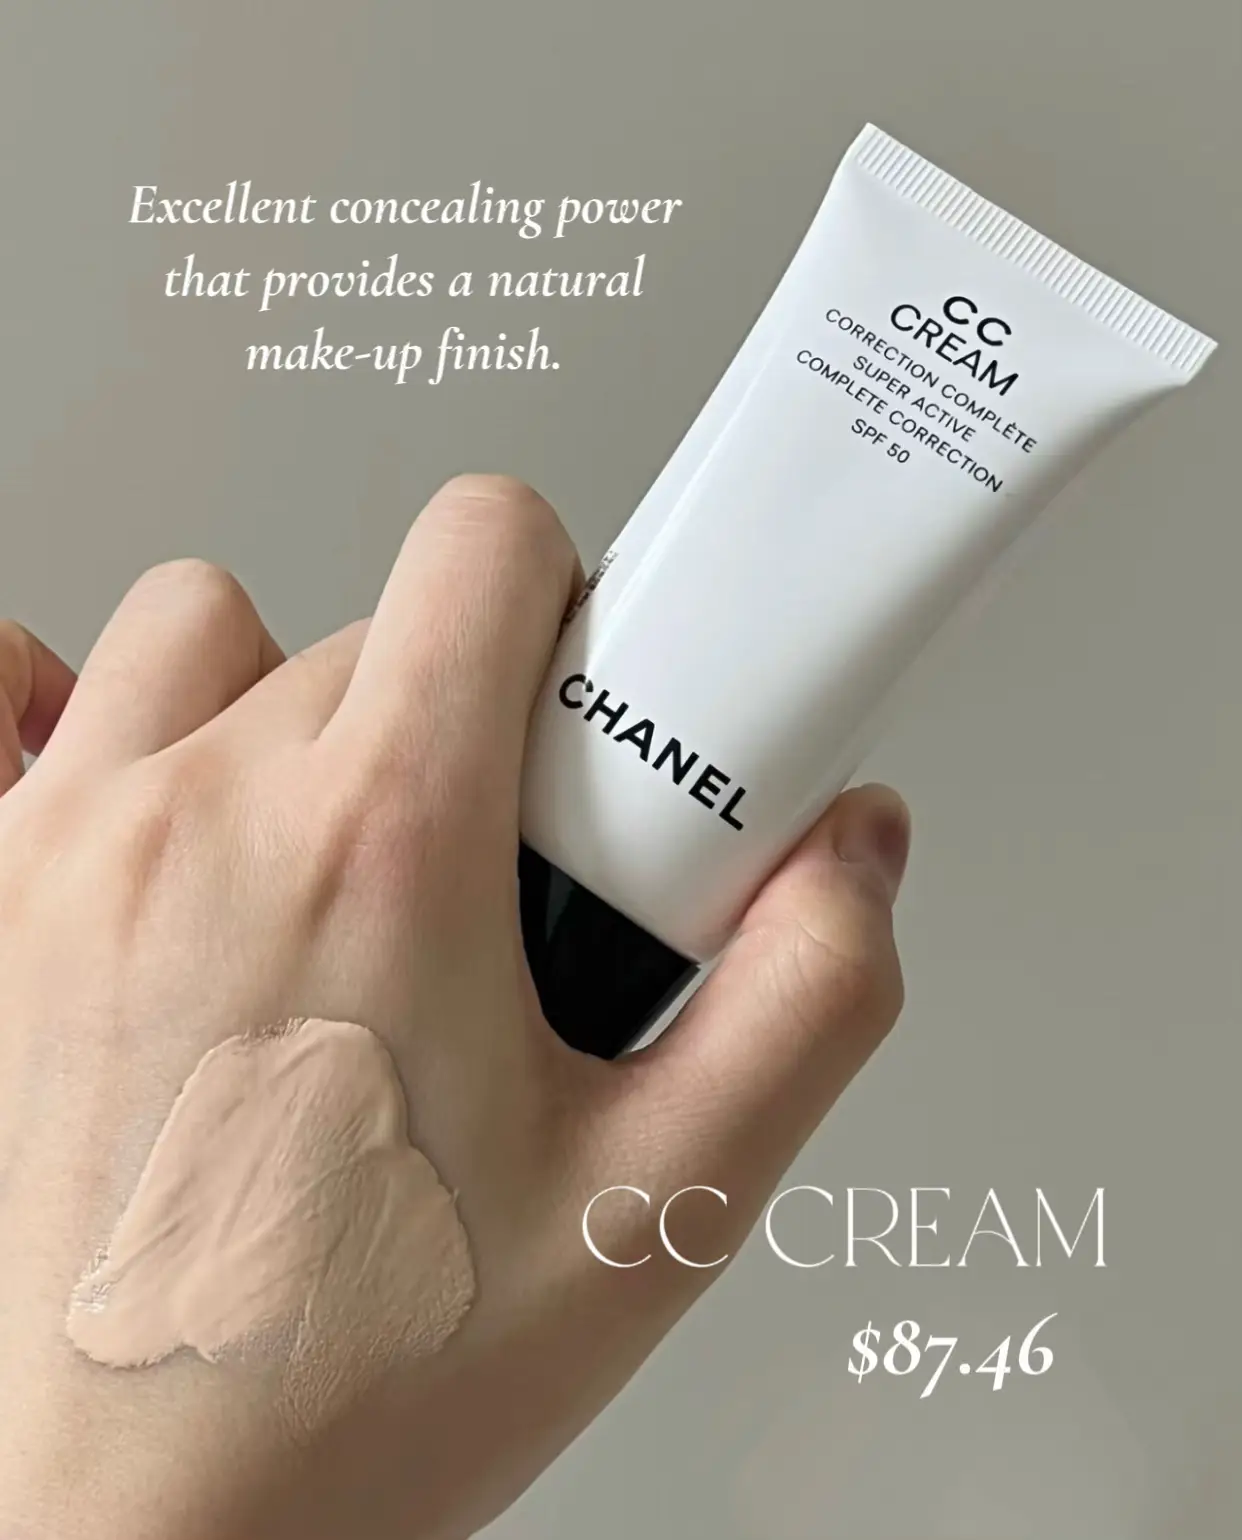 Chanel CC CREAM - Correction Complète Super Active SPF 50 - INCI